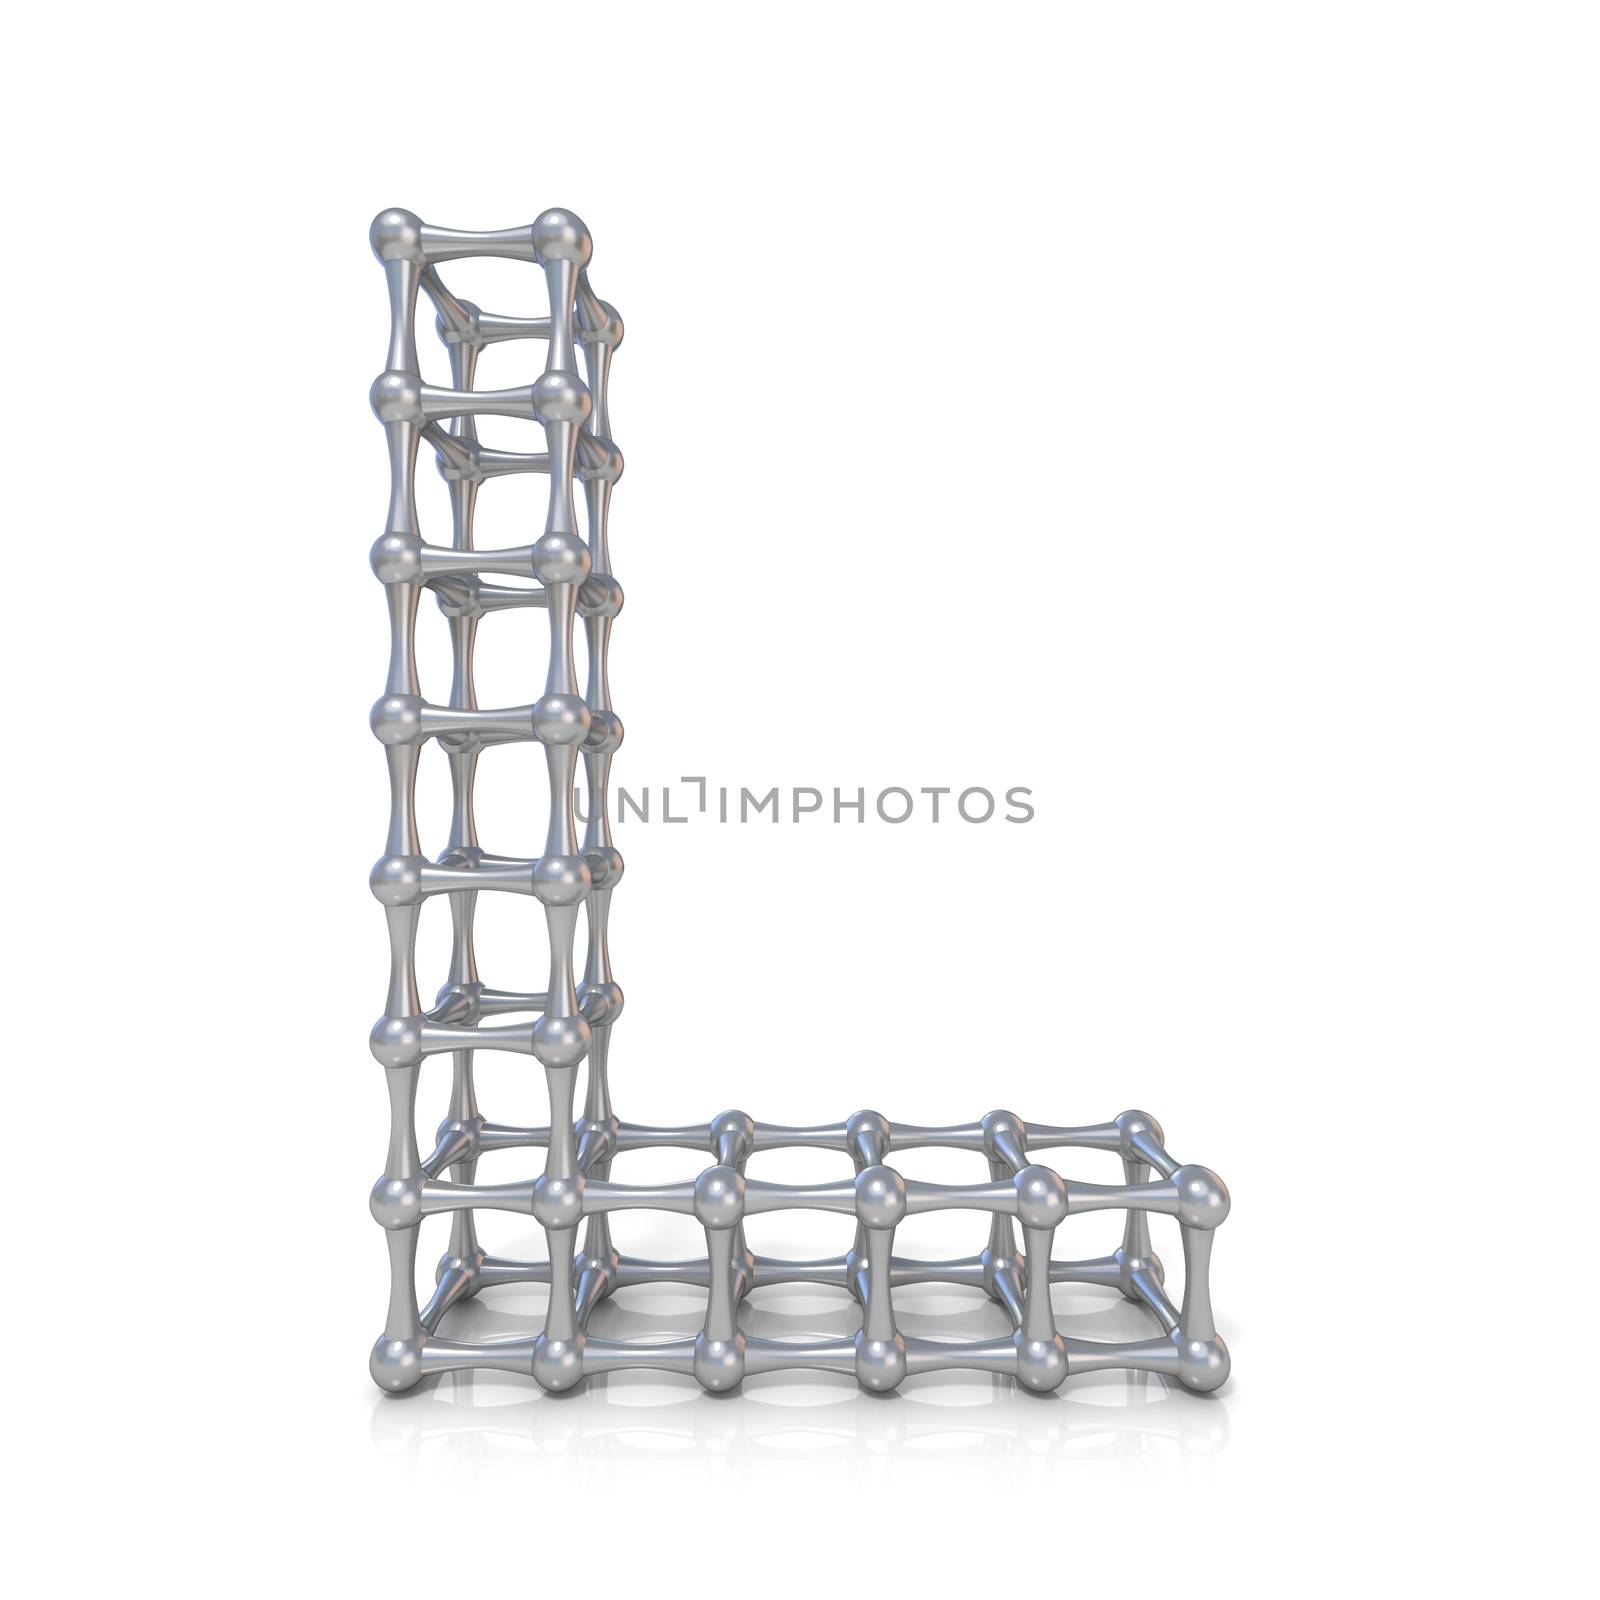 Metal lattice font letter L 3D render illustration isolated on white background